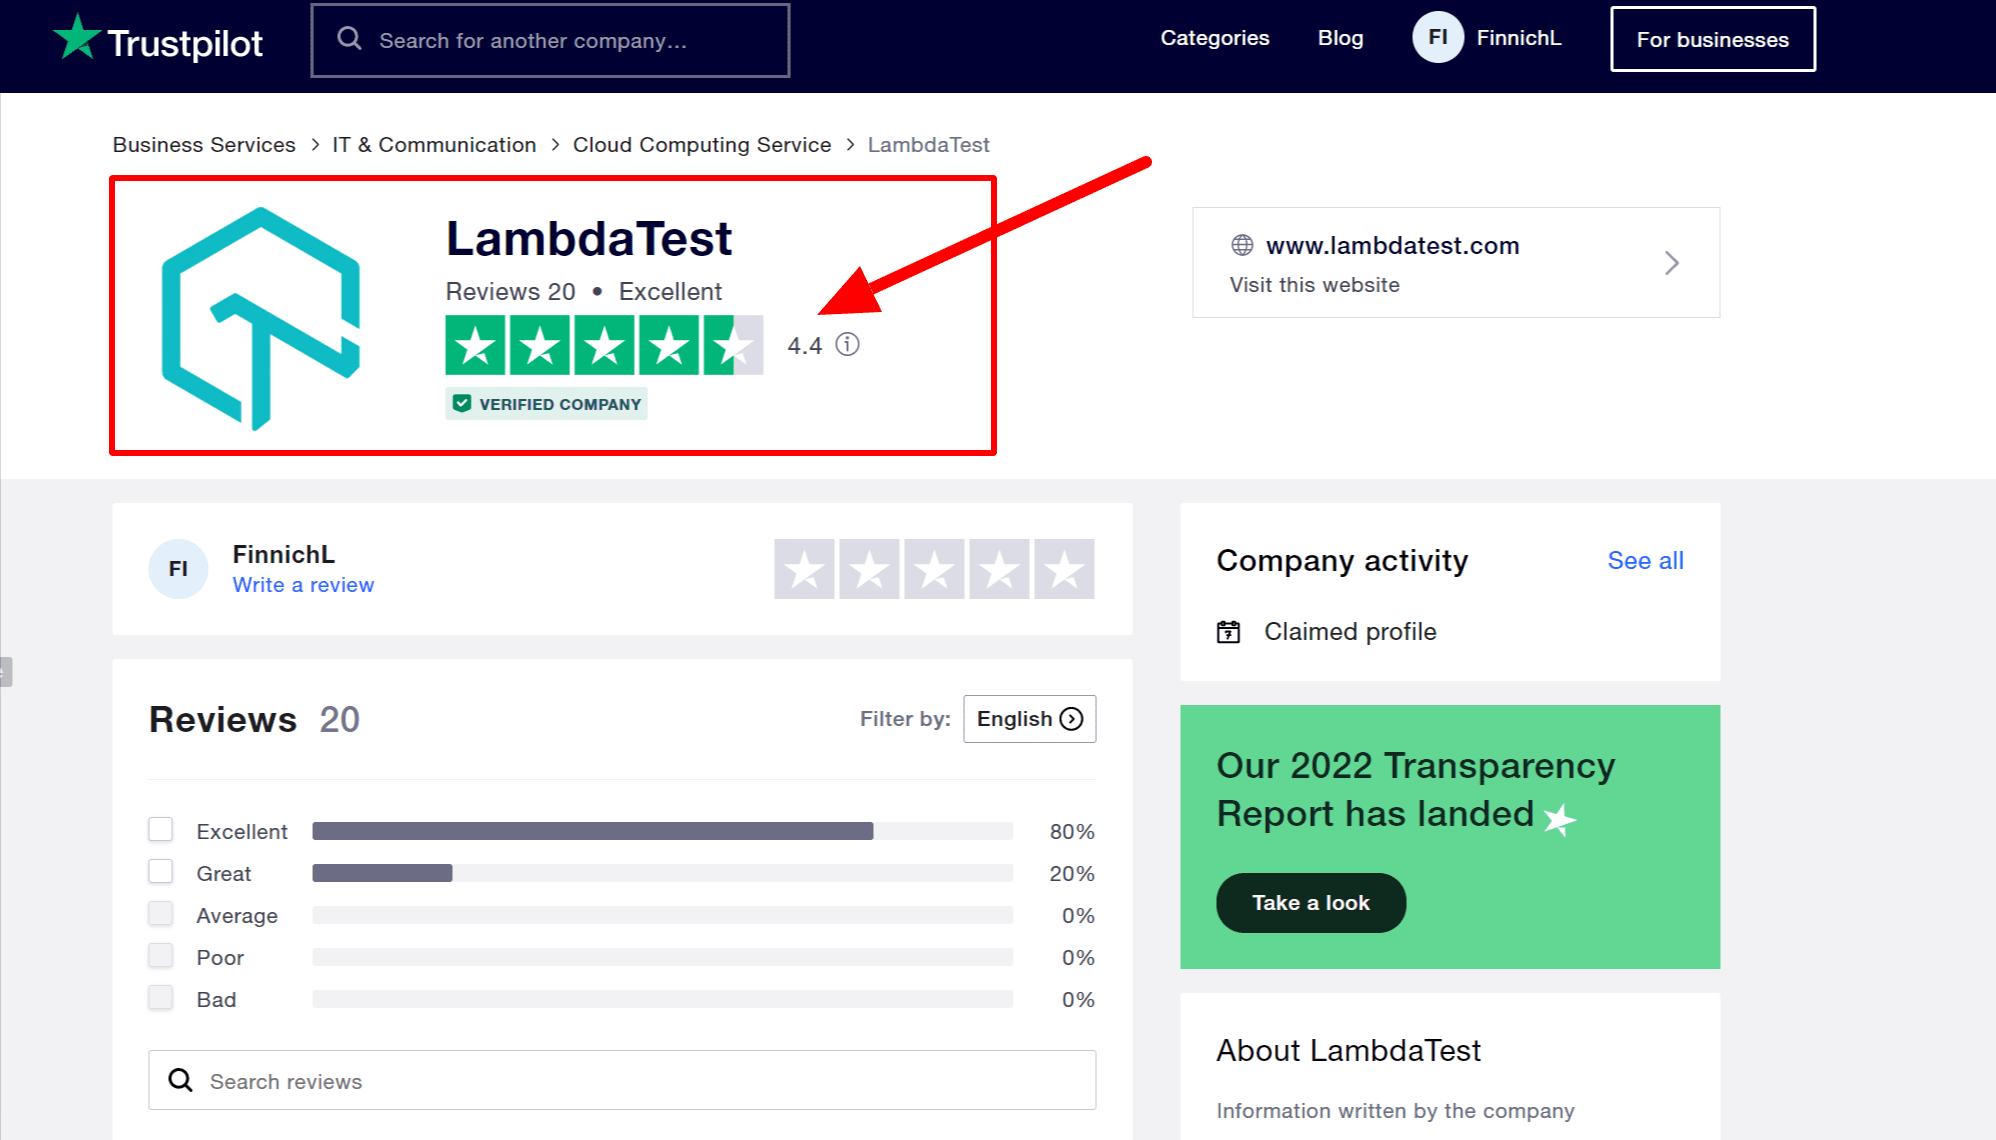 LambdaTest Reviews Read Customer Service Reviews on Trustpilot